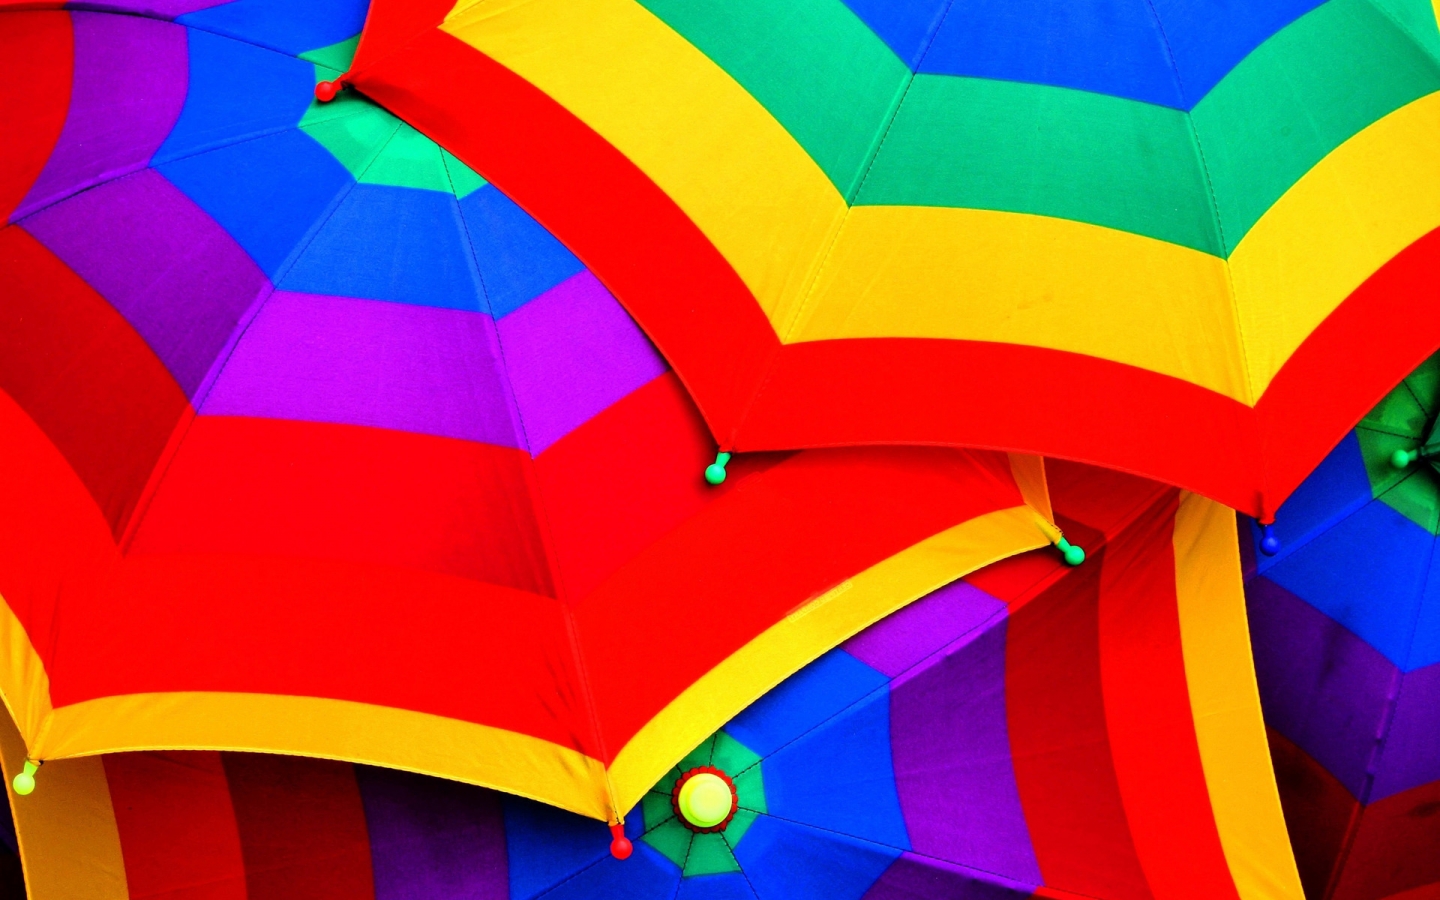 Colorful Umbrellas for 1440 x 900 widescreen resolution